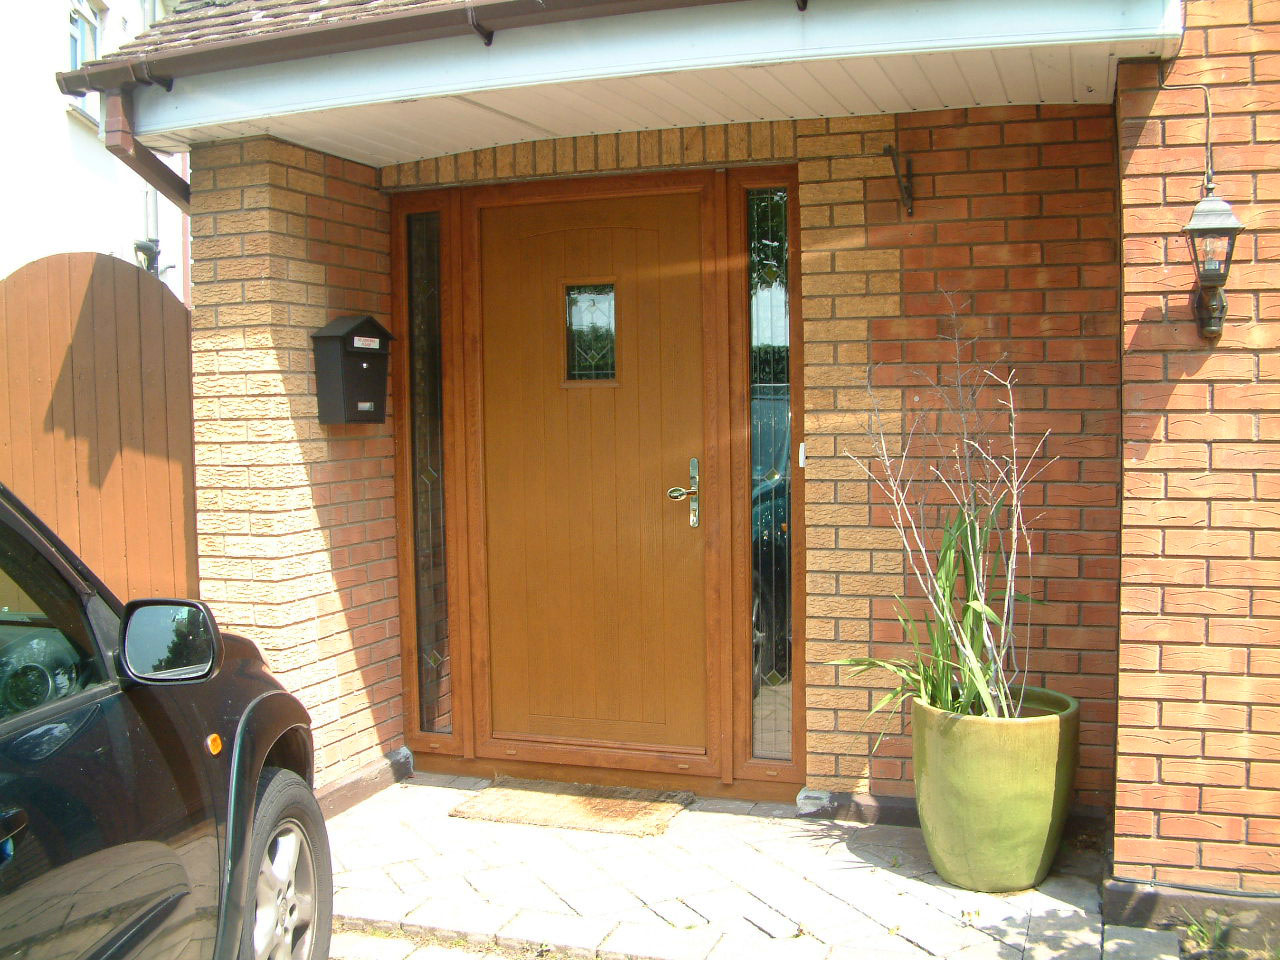 APEER OAK COMPOSITE FRONT DOOR FITTED BY ASGARD WINDOWS IN DUBLIN.